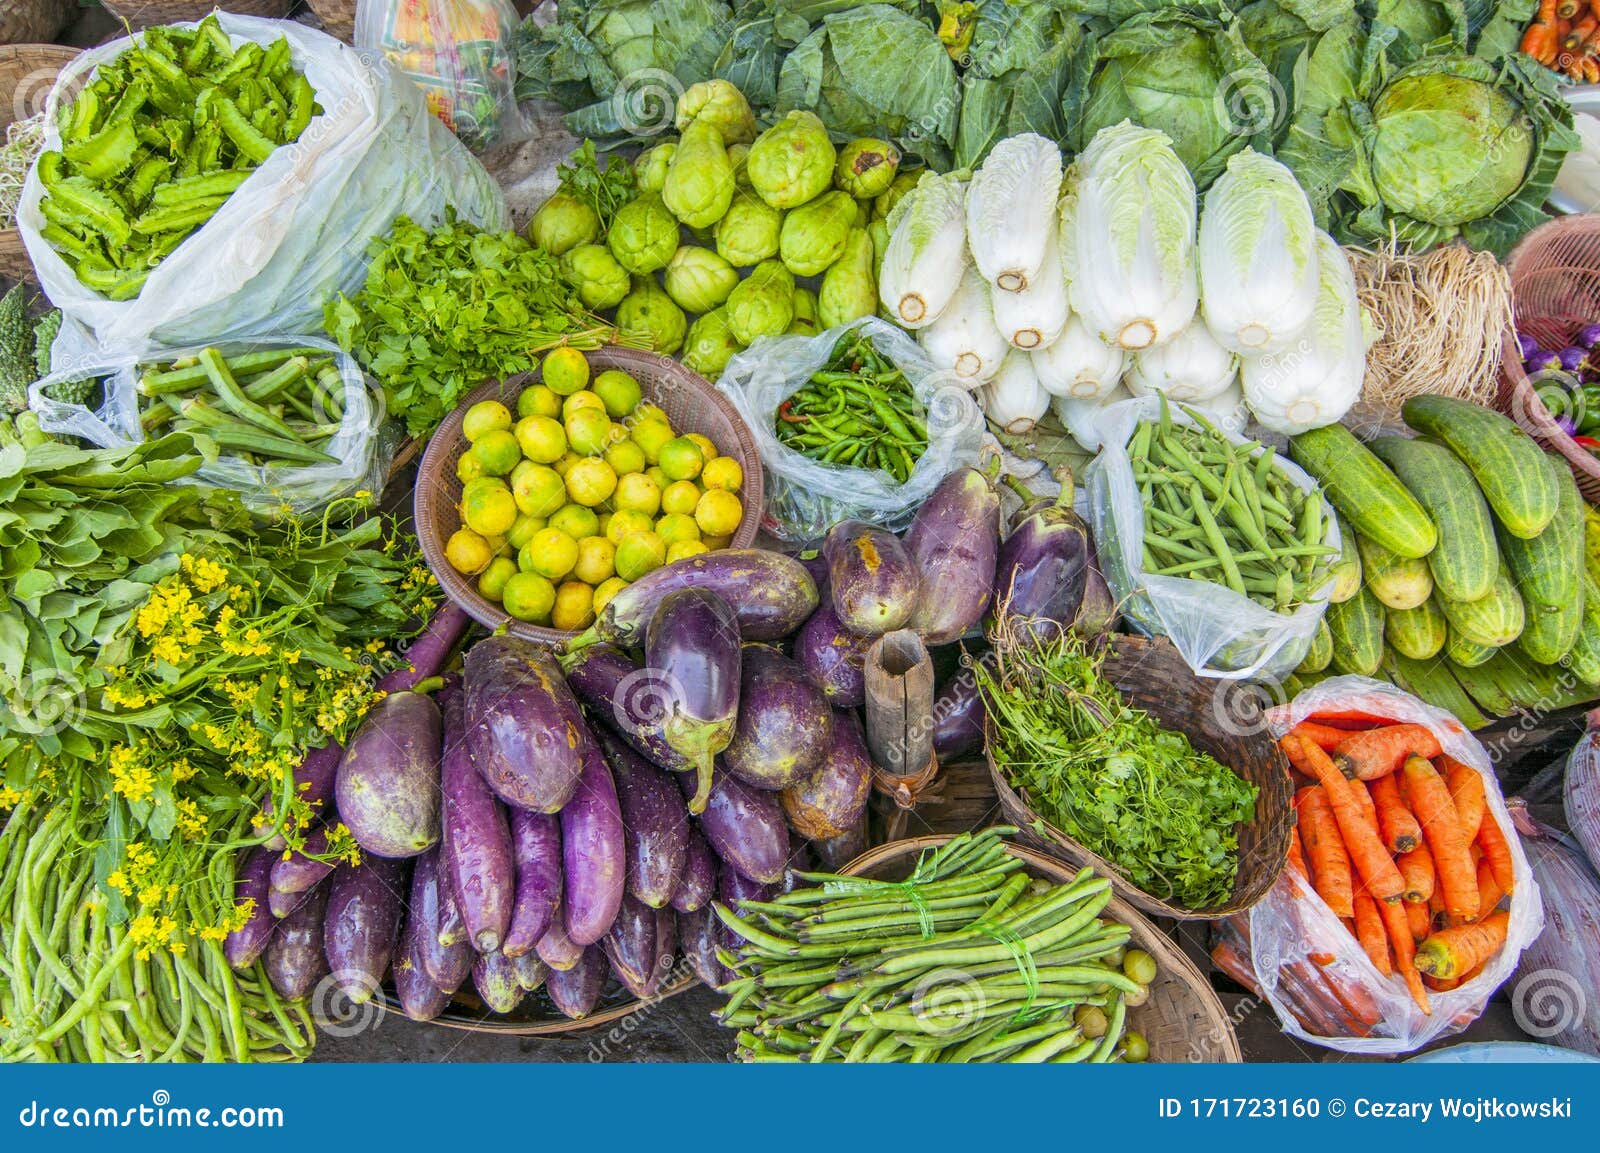 vegetables and fresh fruits for sale at market, near bagan, myanmar burma